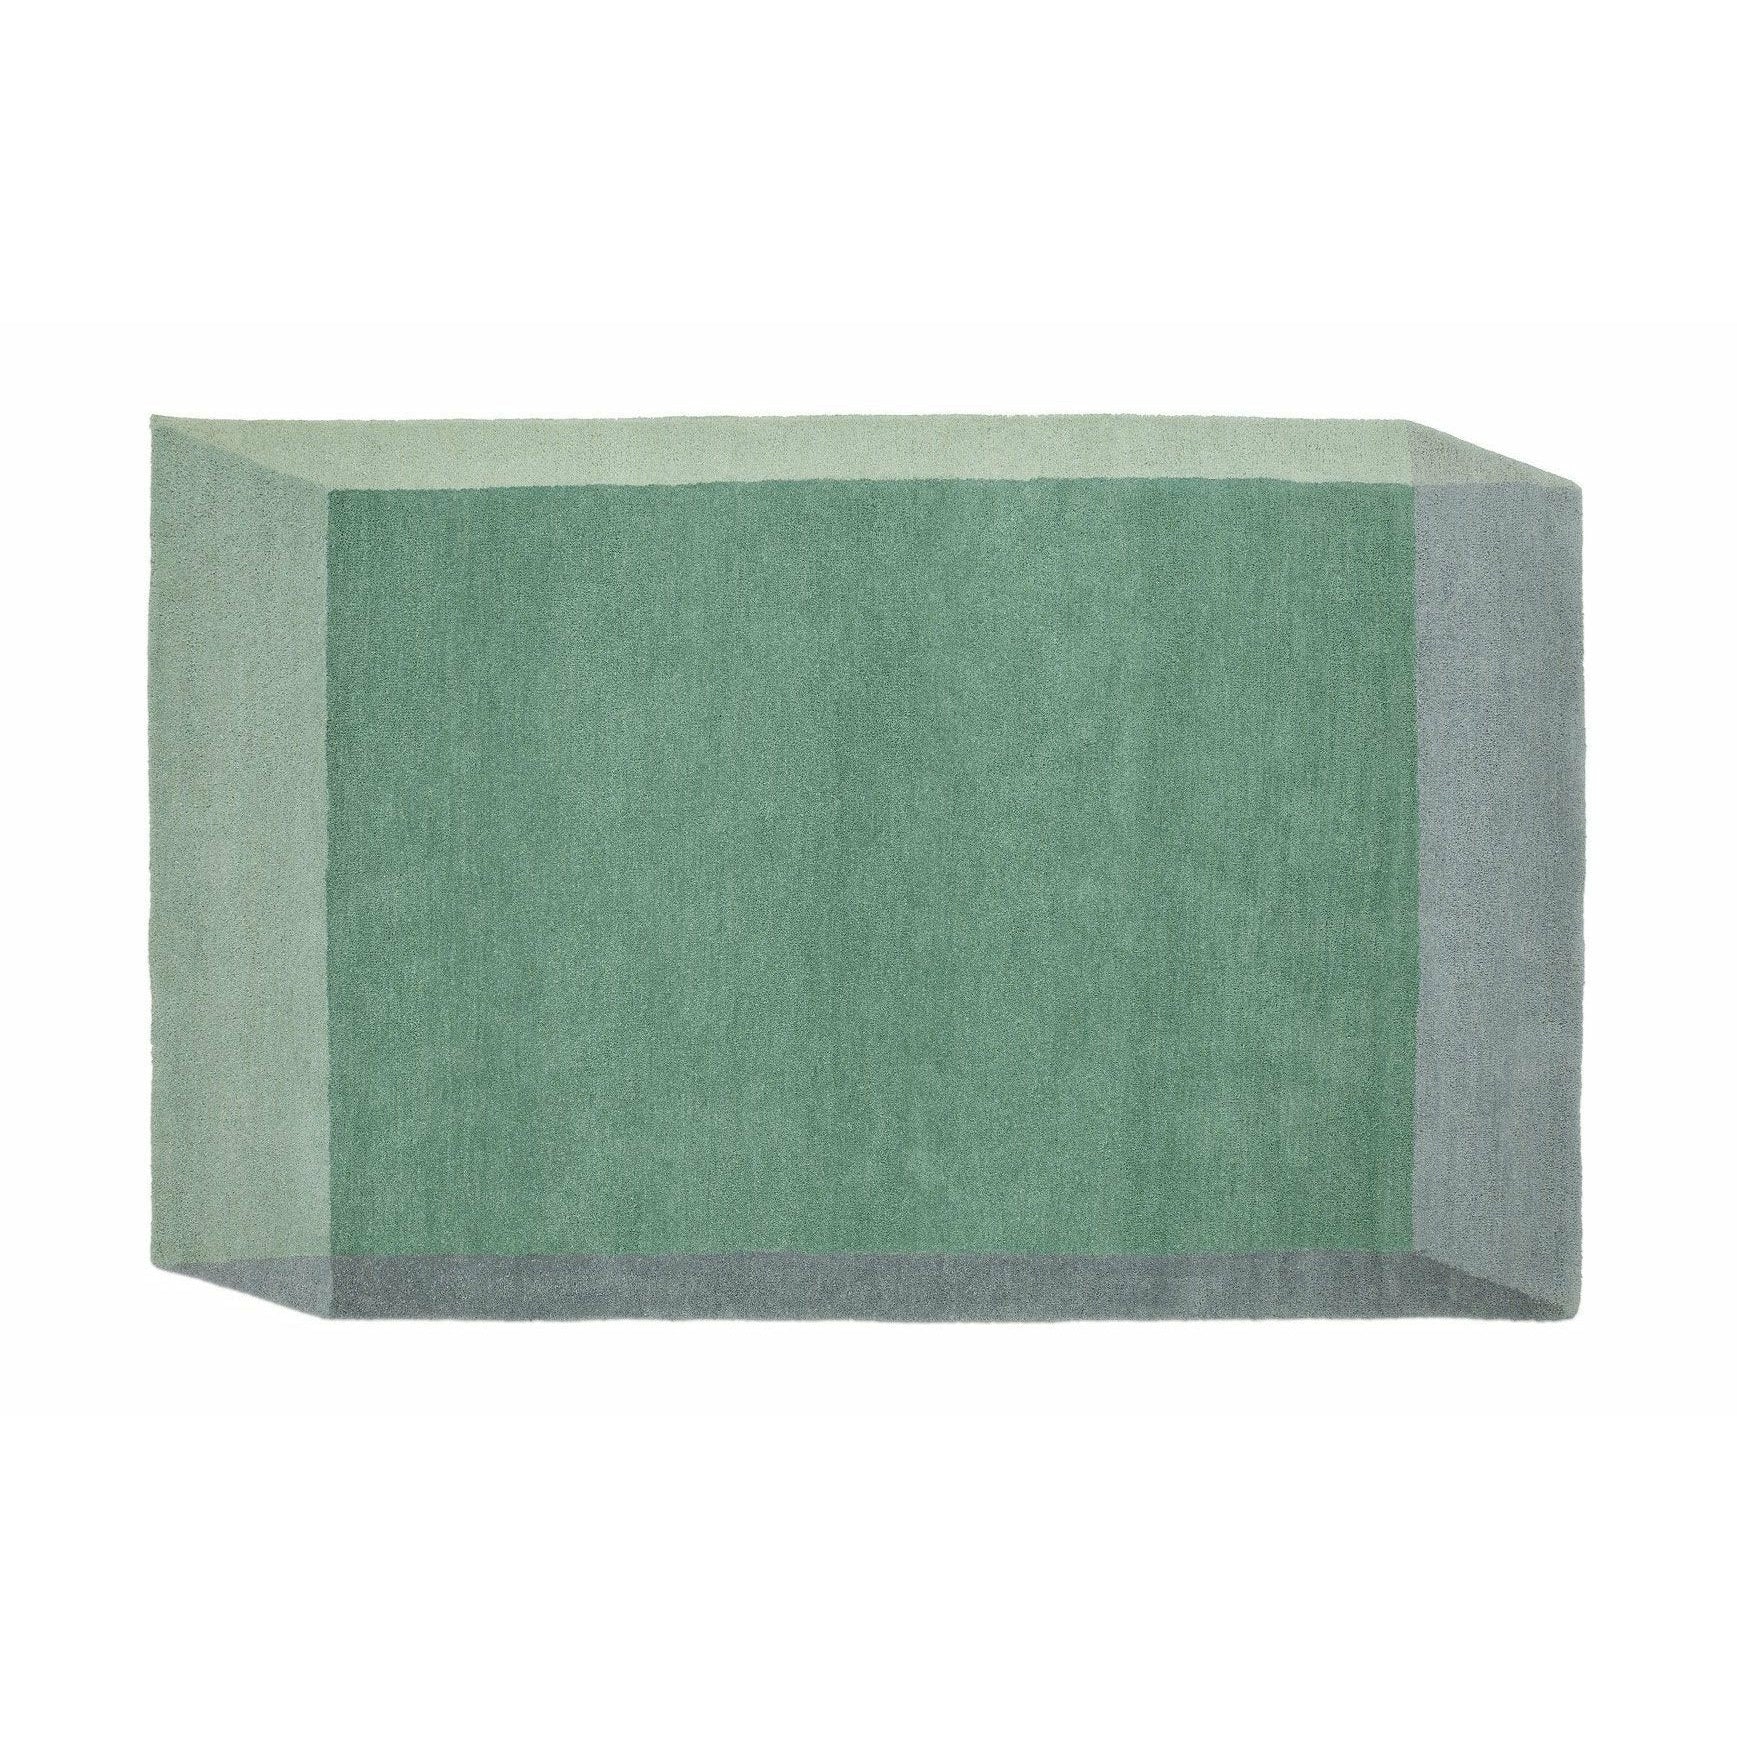 PUIK Iso matta rektangulär, grön